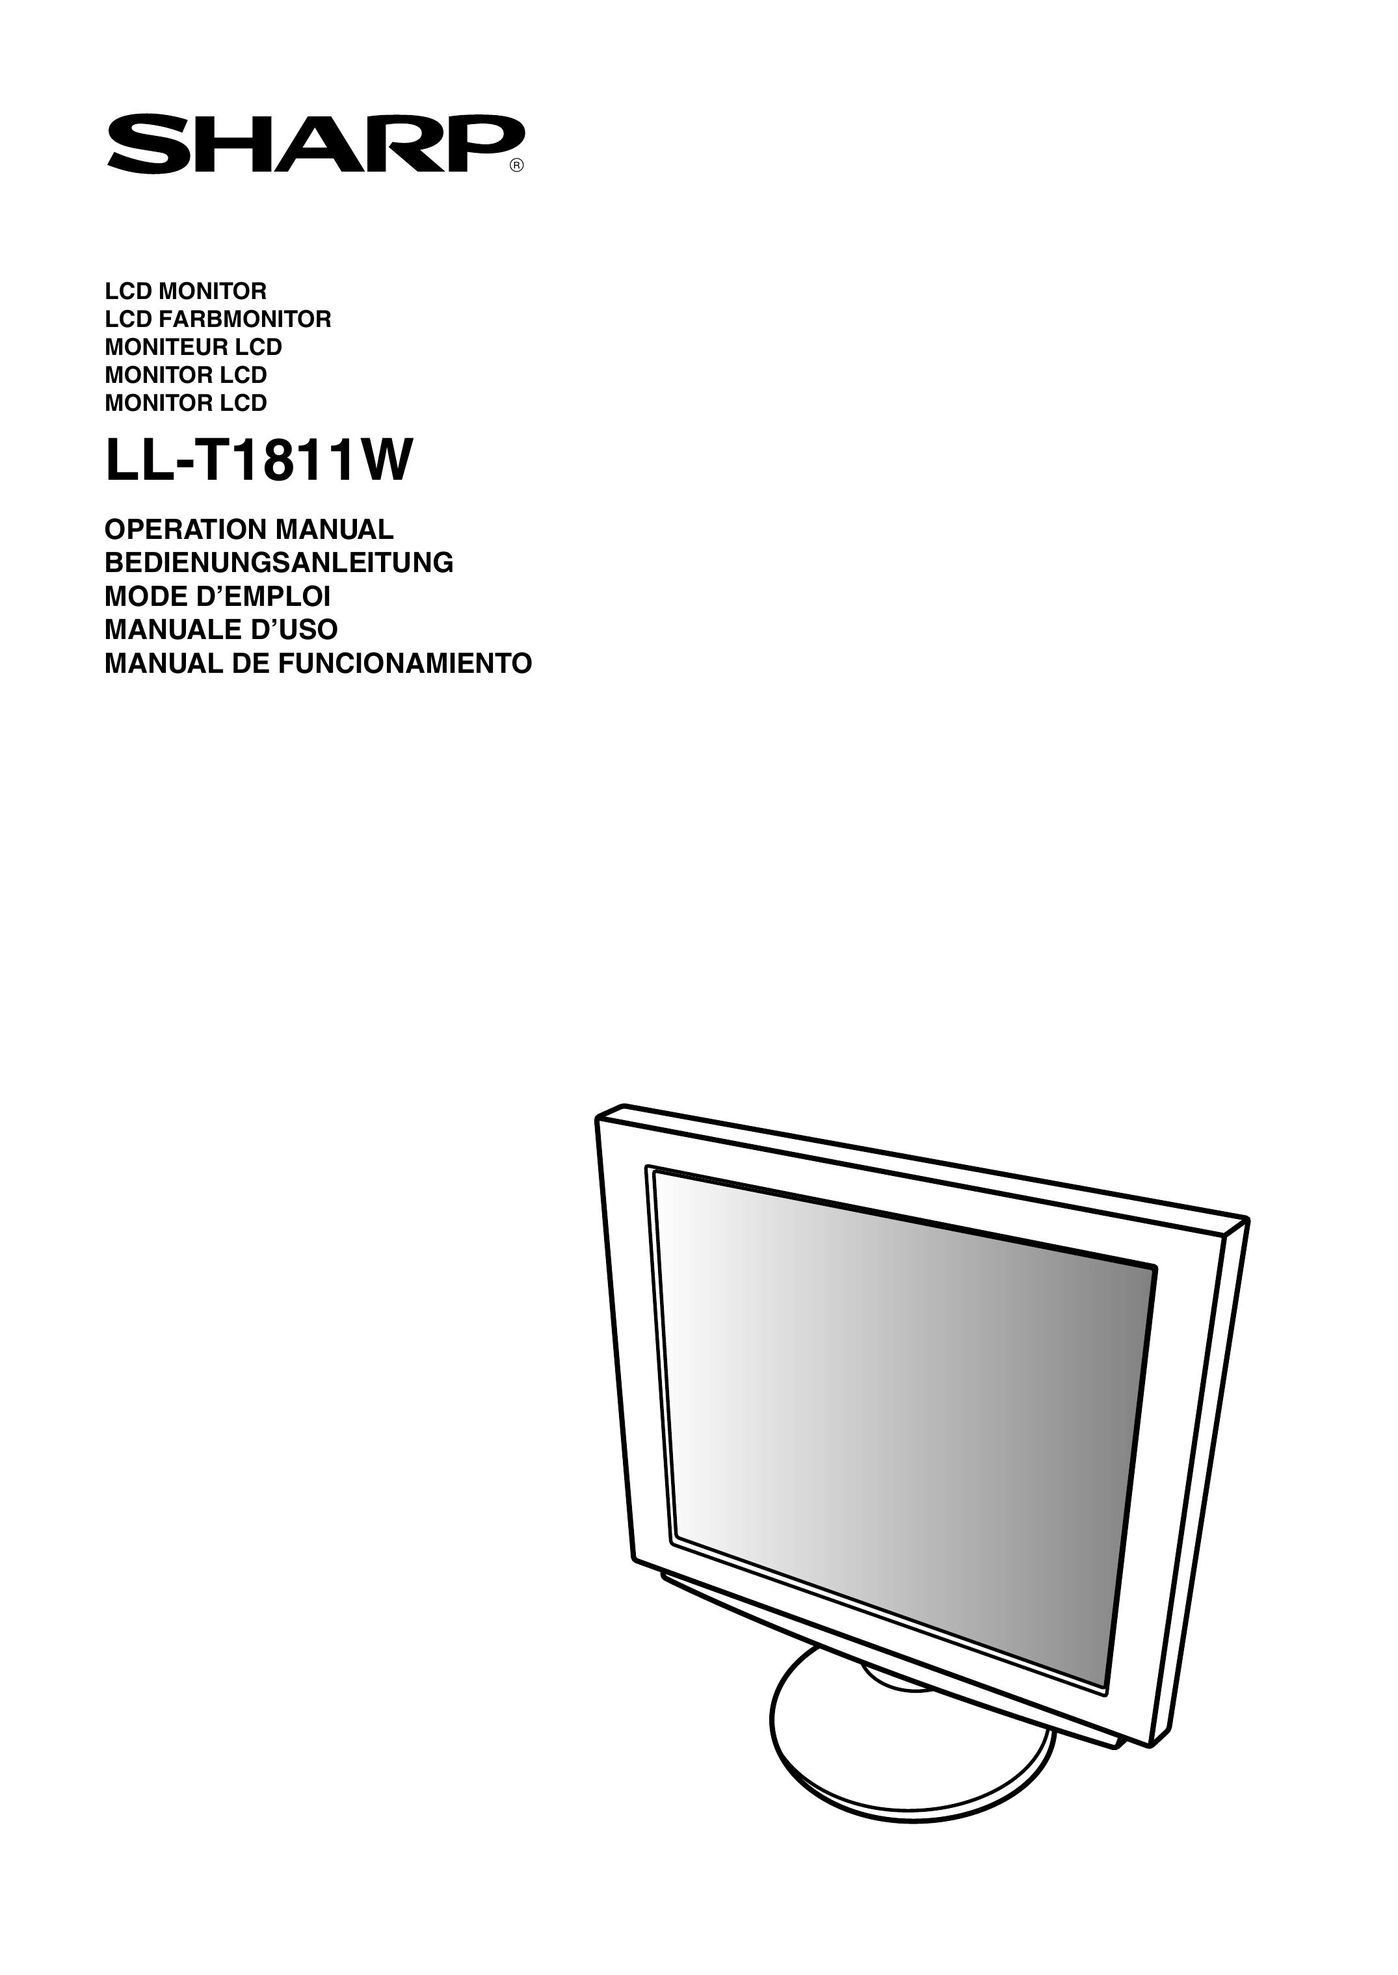 Sharp LL-T1811W Computer Monitor User Manual